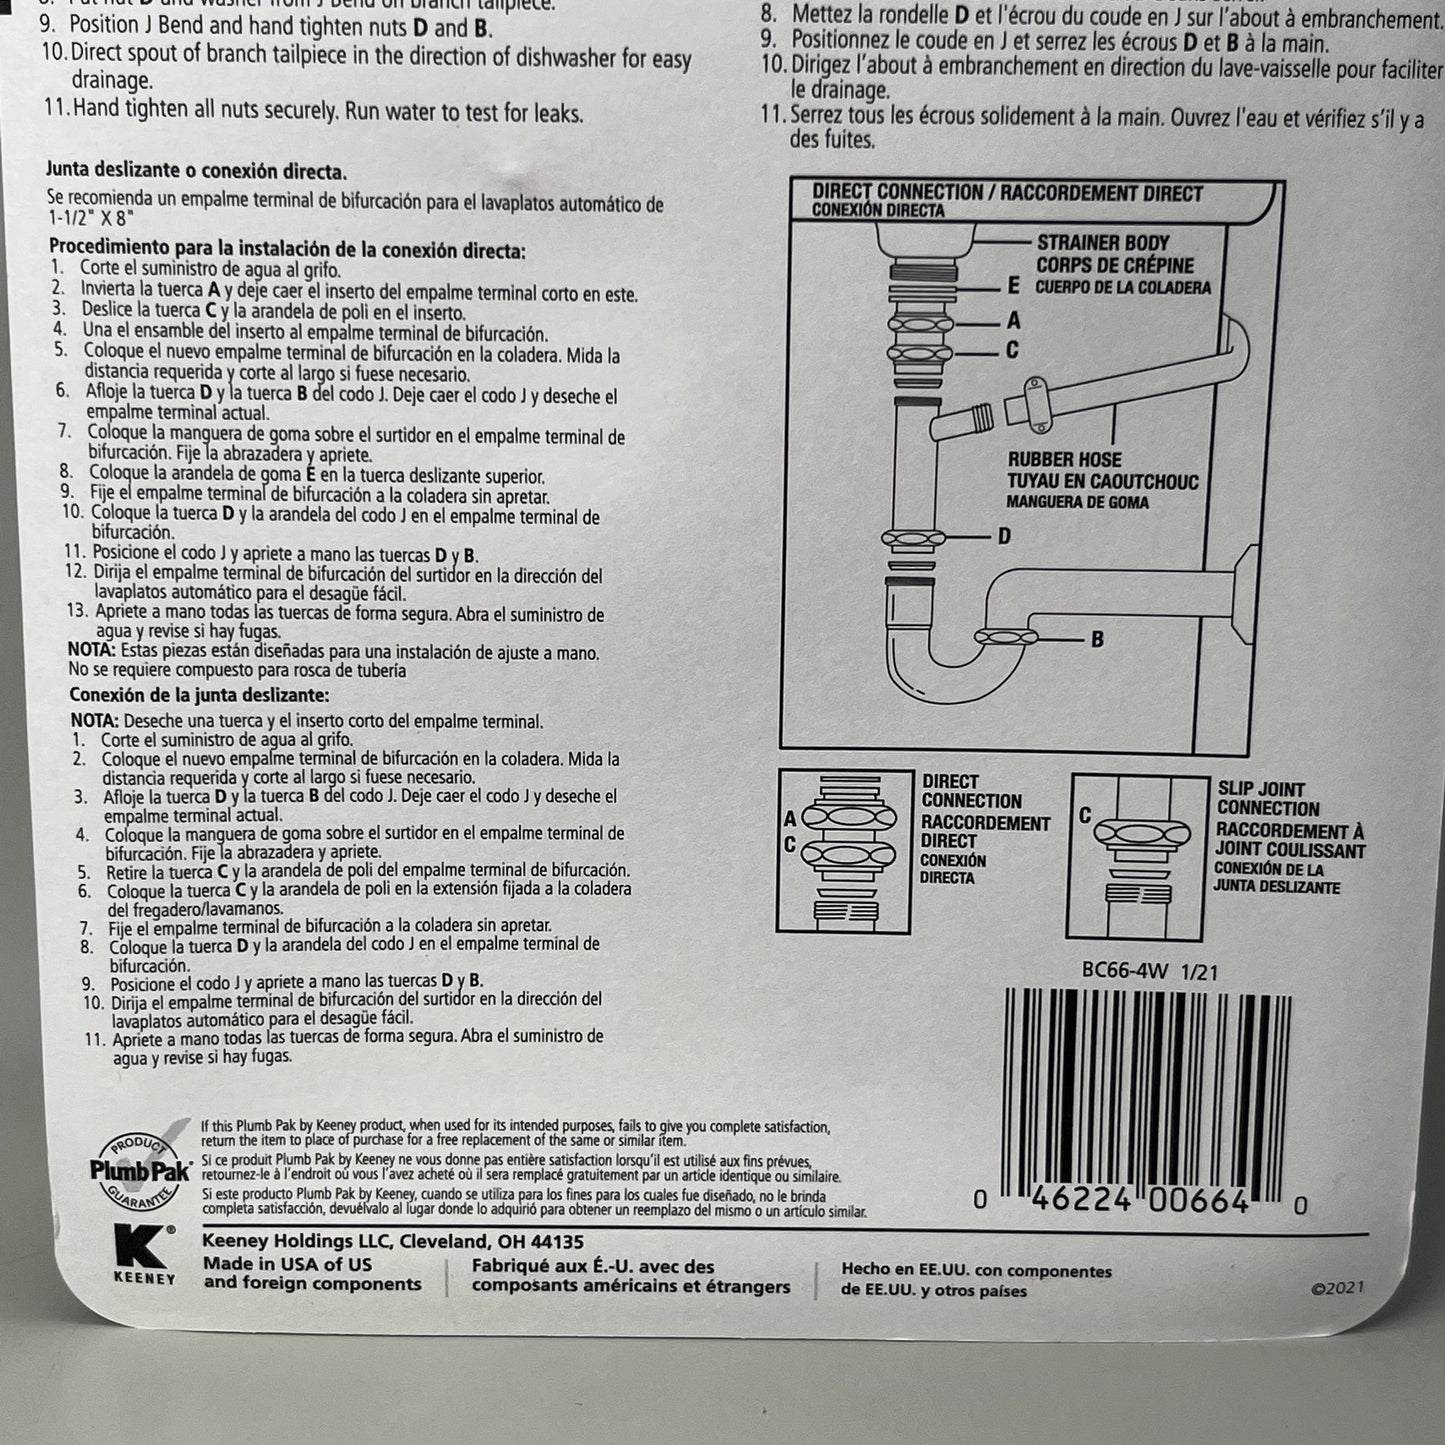 PLUMB PAK Branch Dishwasher Tailpiece SJ/DC 1 1/2" 7/8" PP66-4W